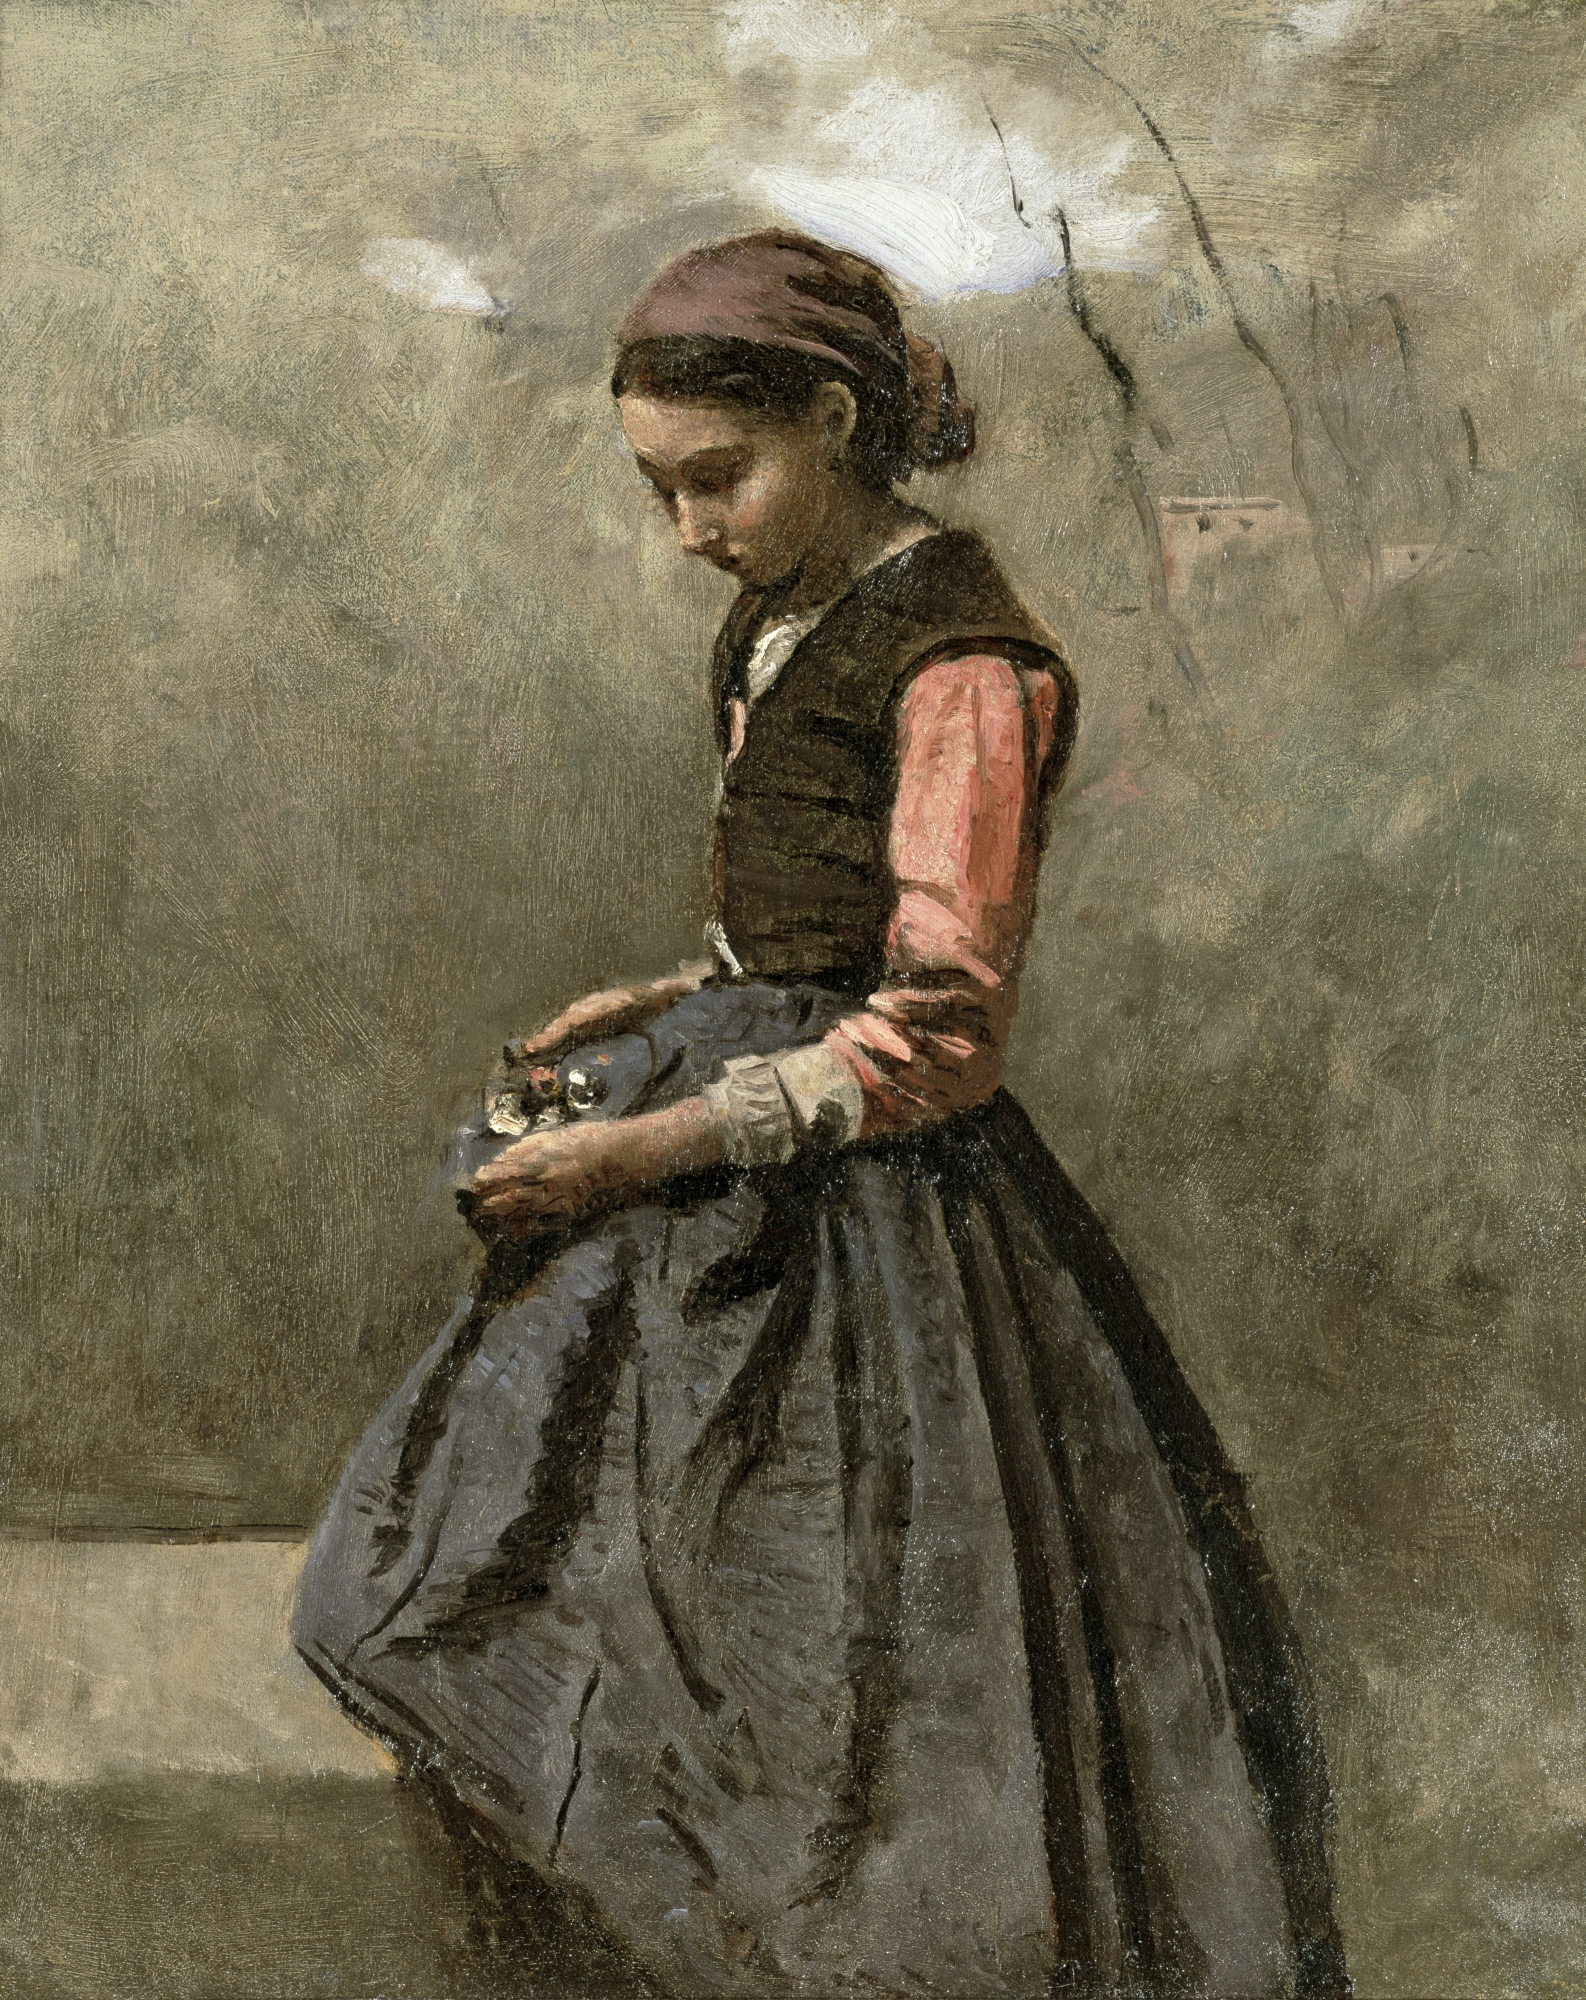 A Pensive Girl by Jean-Baptiste-Camille Corot - c. 1865-70 - 46.3 × 38.1 cm Tokyo Fuji Art Museum